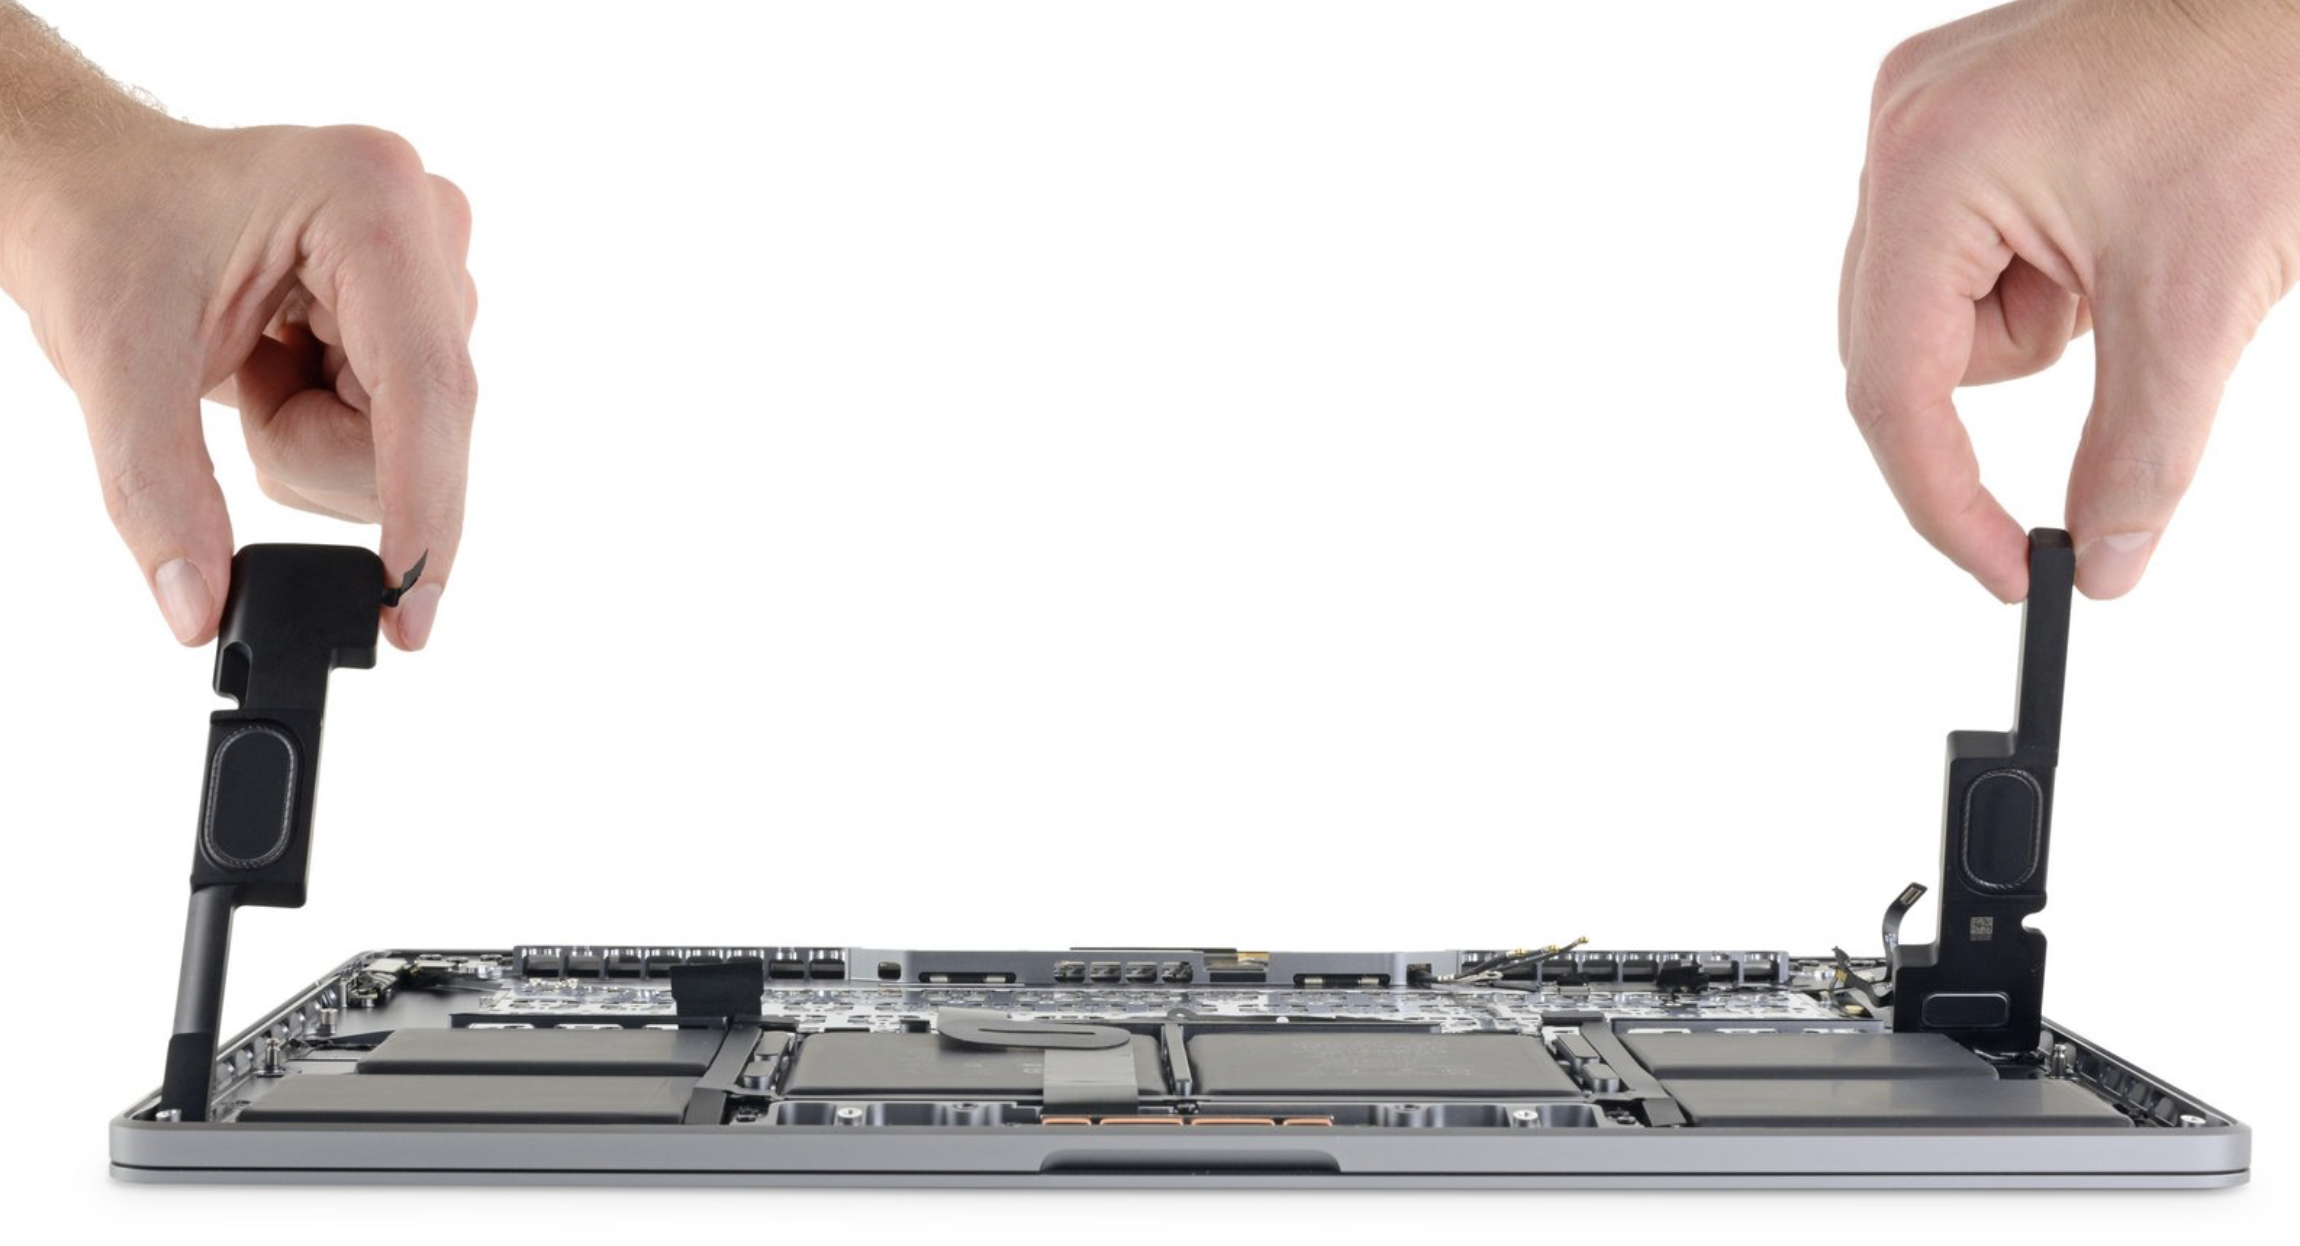 16-inch MacBook Pro teardown highlights new keyboard, more - 9to5Mac